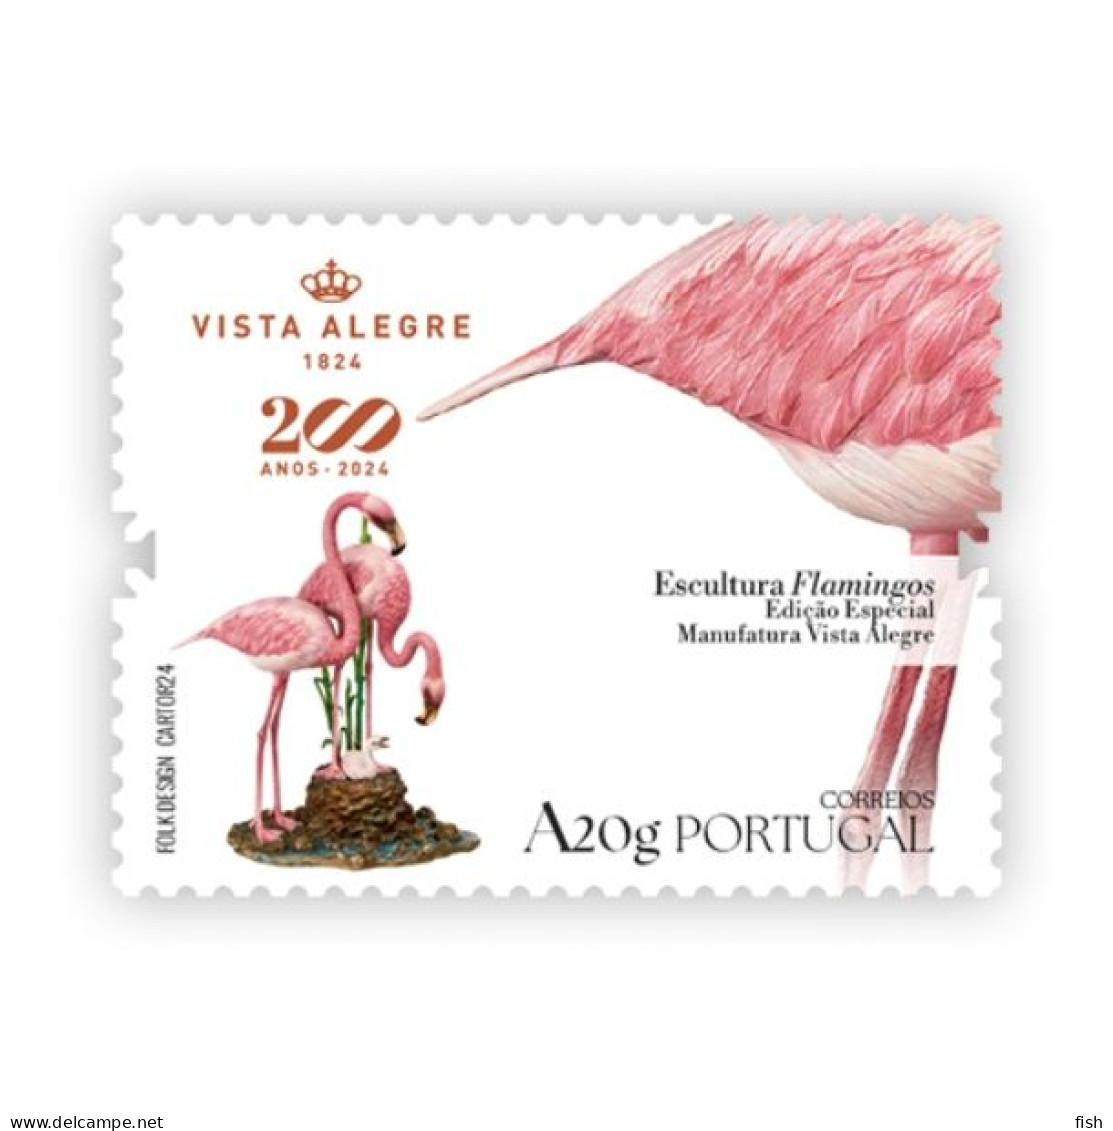 Portugal ** & 200 Years Of Vista Alegre, Flamingo Sculpture, Special Edition Manufatura Vista Alegre 1824-2024 (799) - Factories & Industries